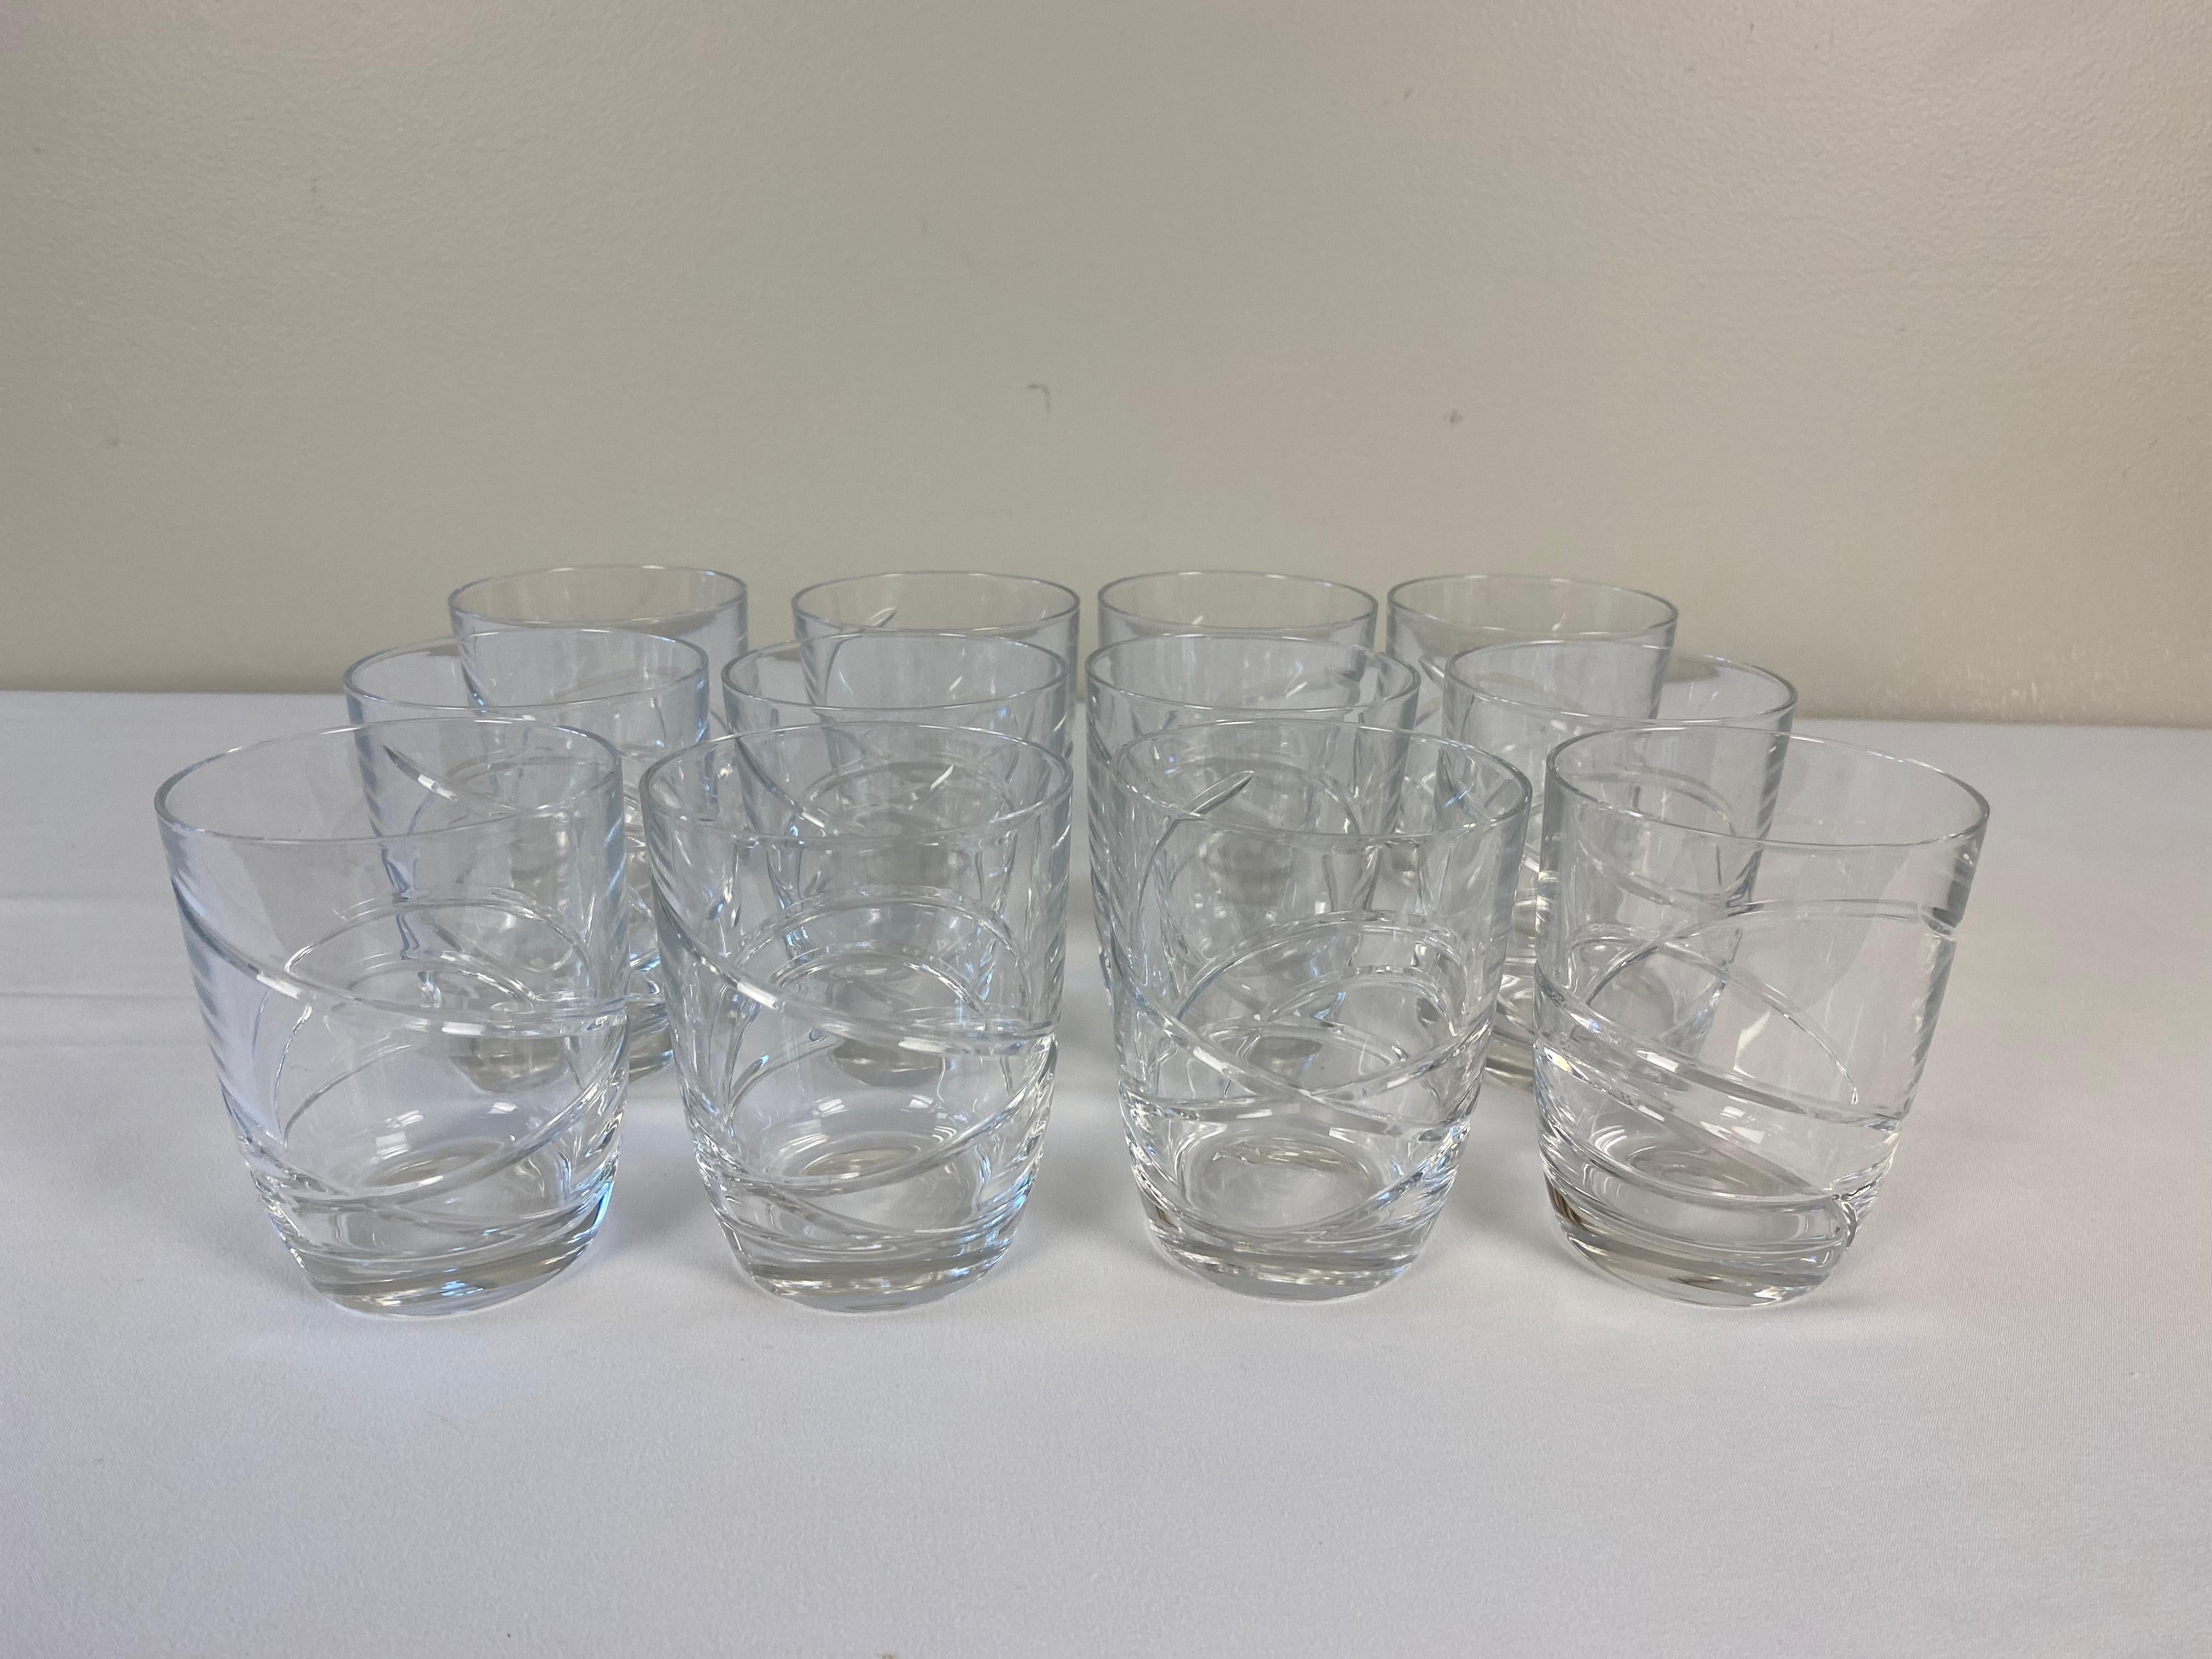 Czech Set of 12 Cut Crystal Liquor Whiskey or Liquor Glasses by Lenox For Sale